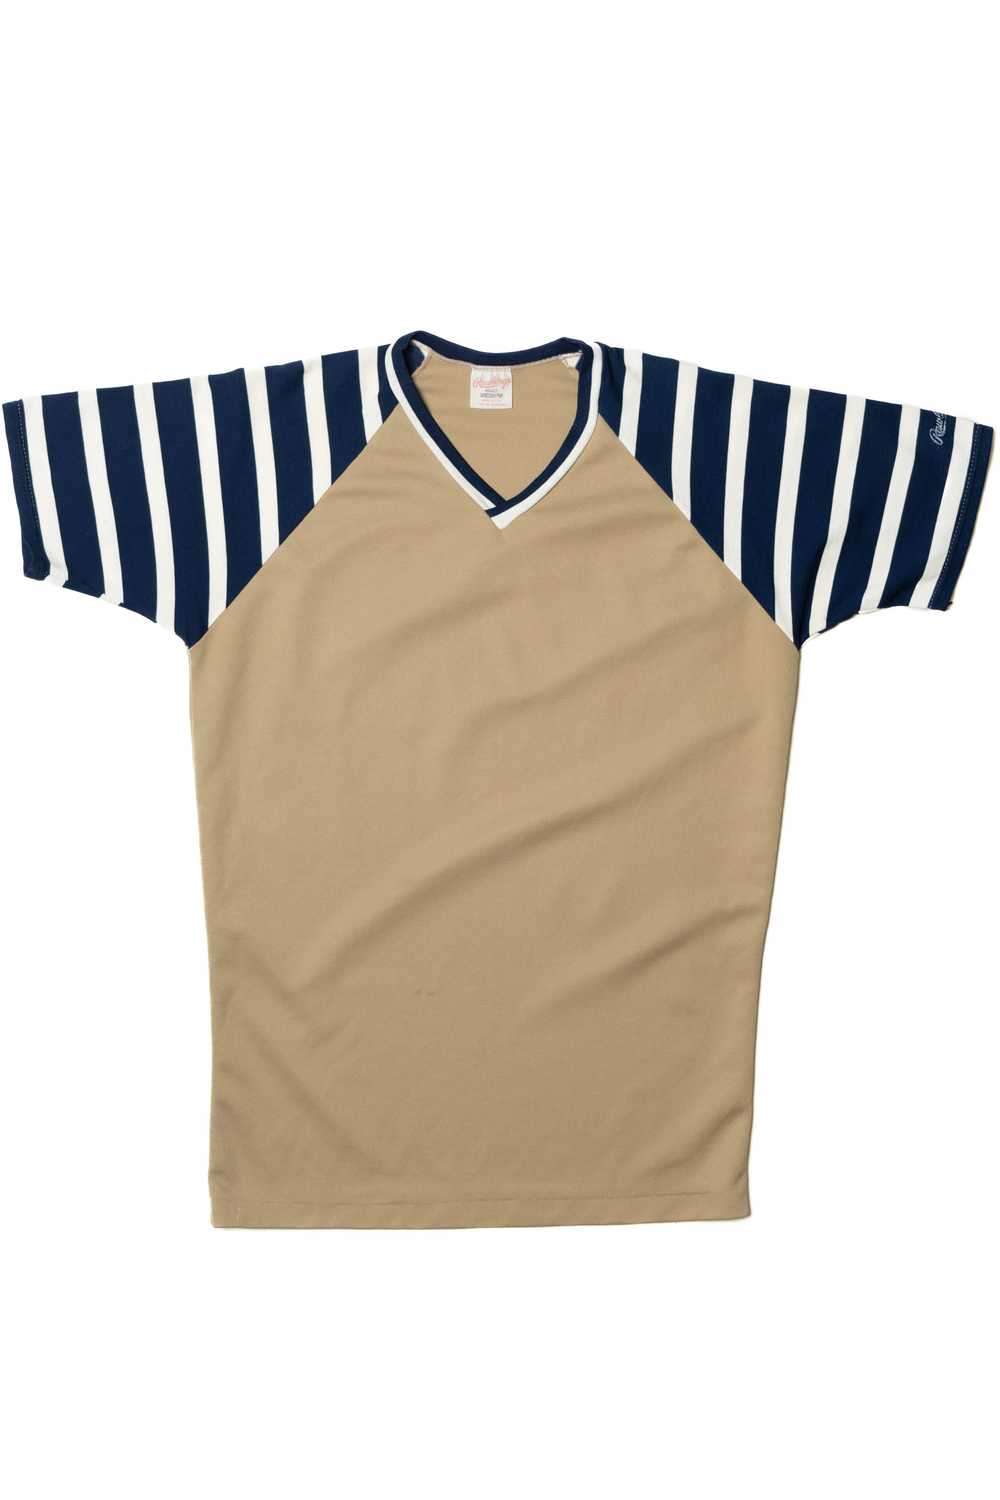 Vintage Striped Sleeve Blank Rawlings Baseball Je… - image 1